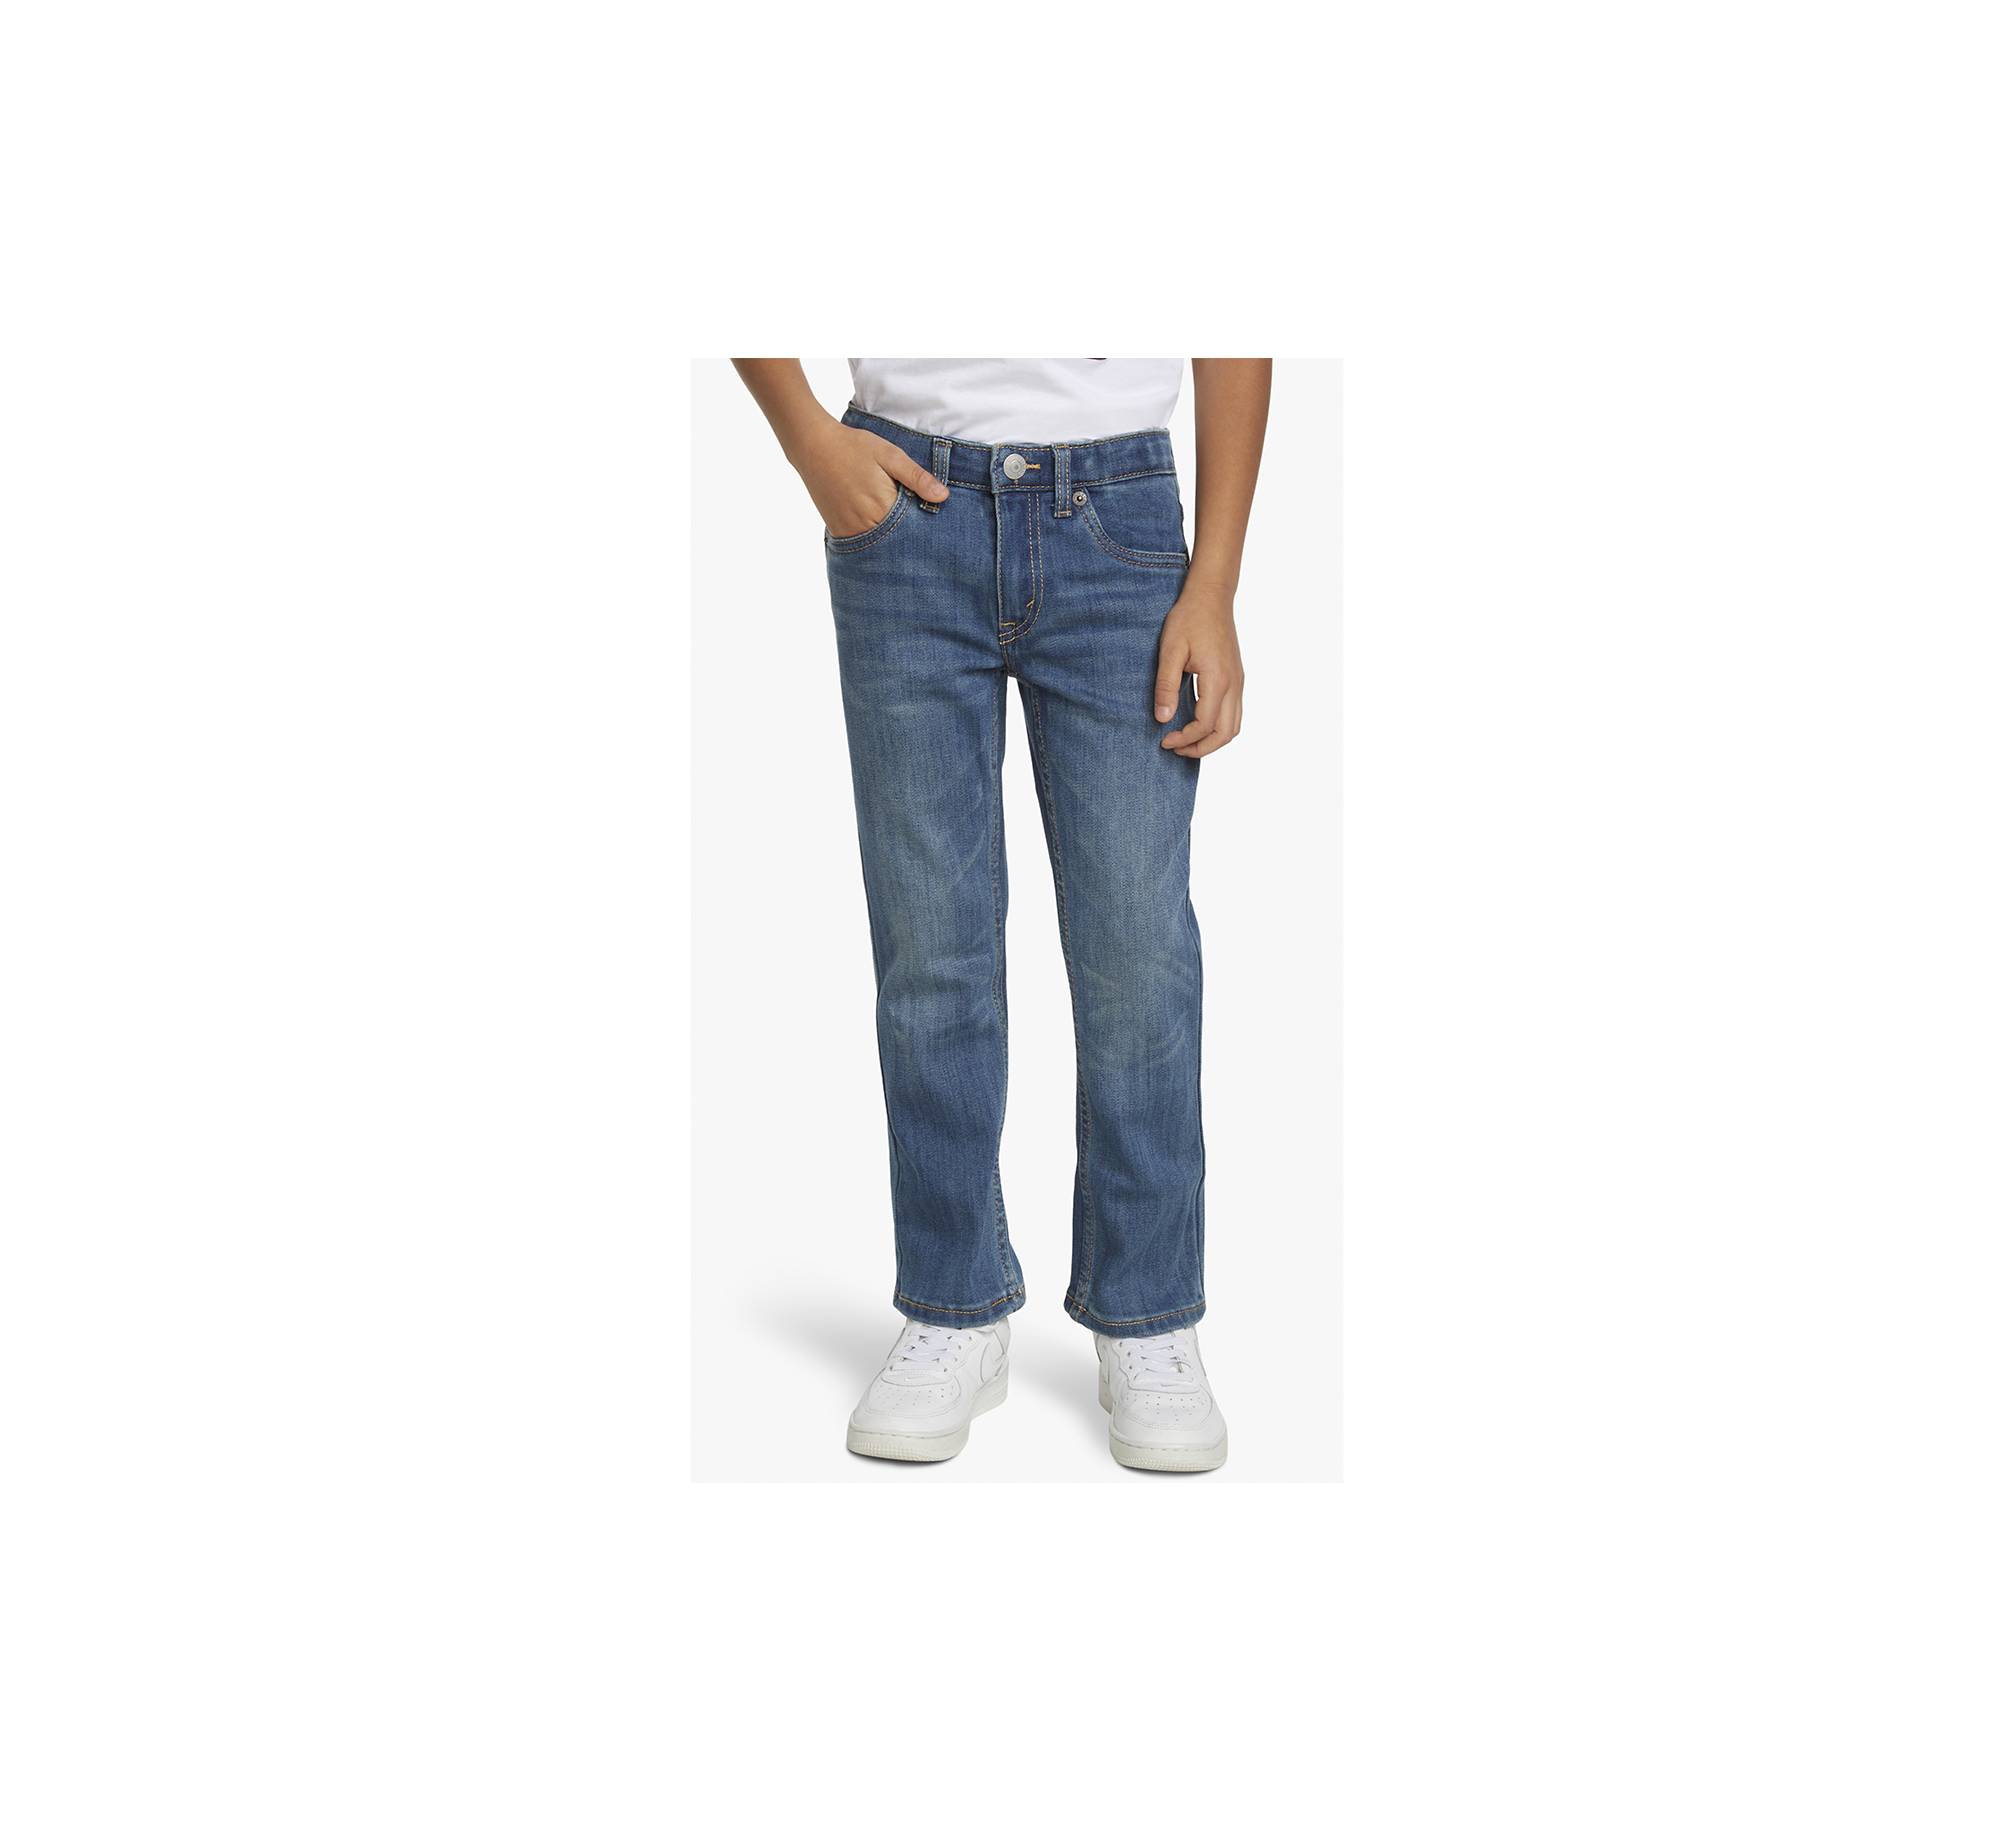 511™ Slim Fit Performance Little Boys Jeans 4-7x 1